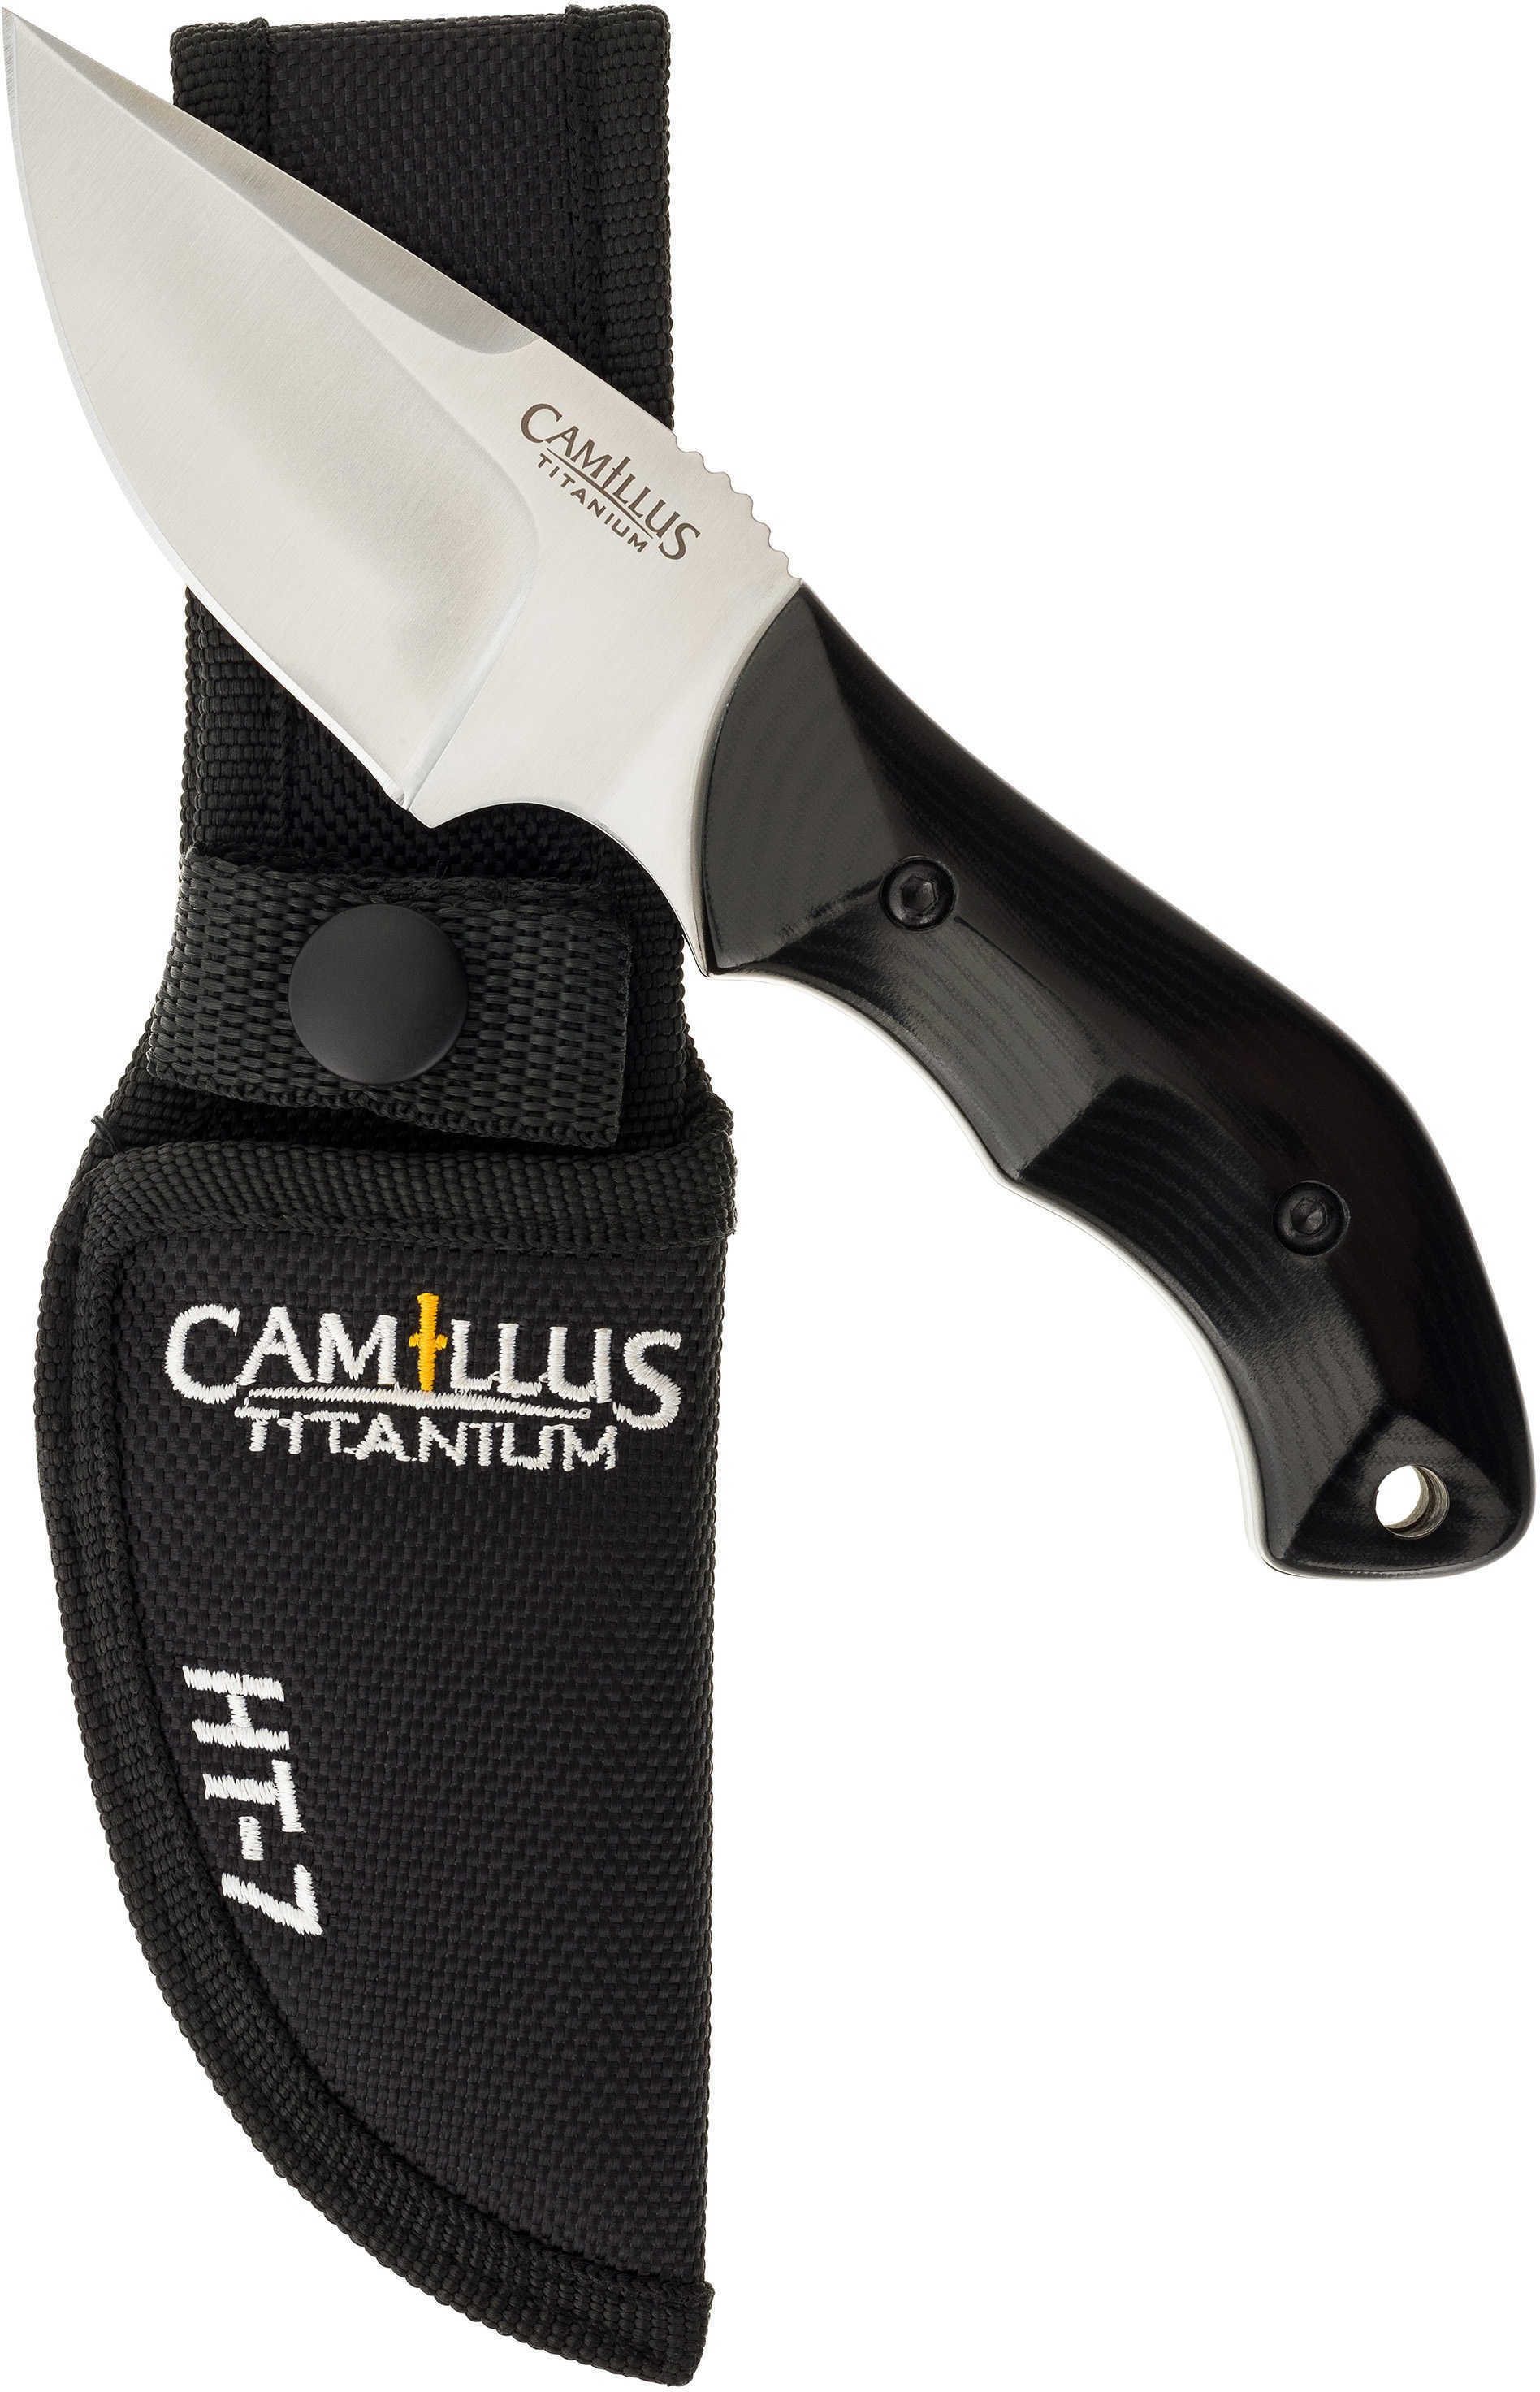 Camillus Cutlery Company Ht-7 Fixed Blade Knife Sheath Md: 19218